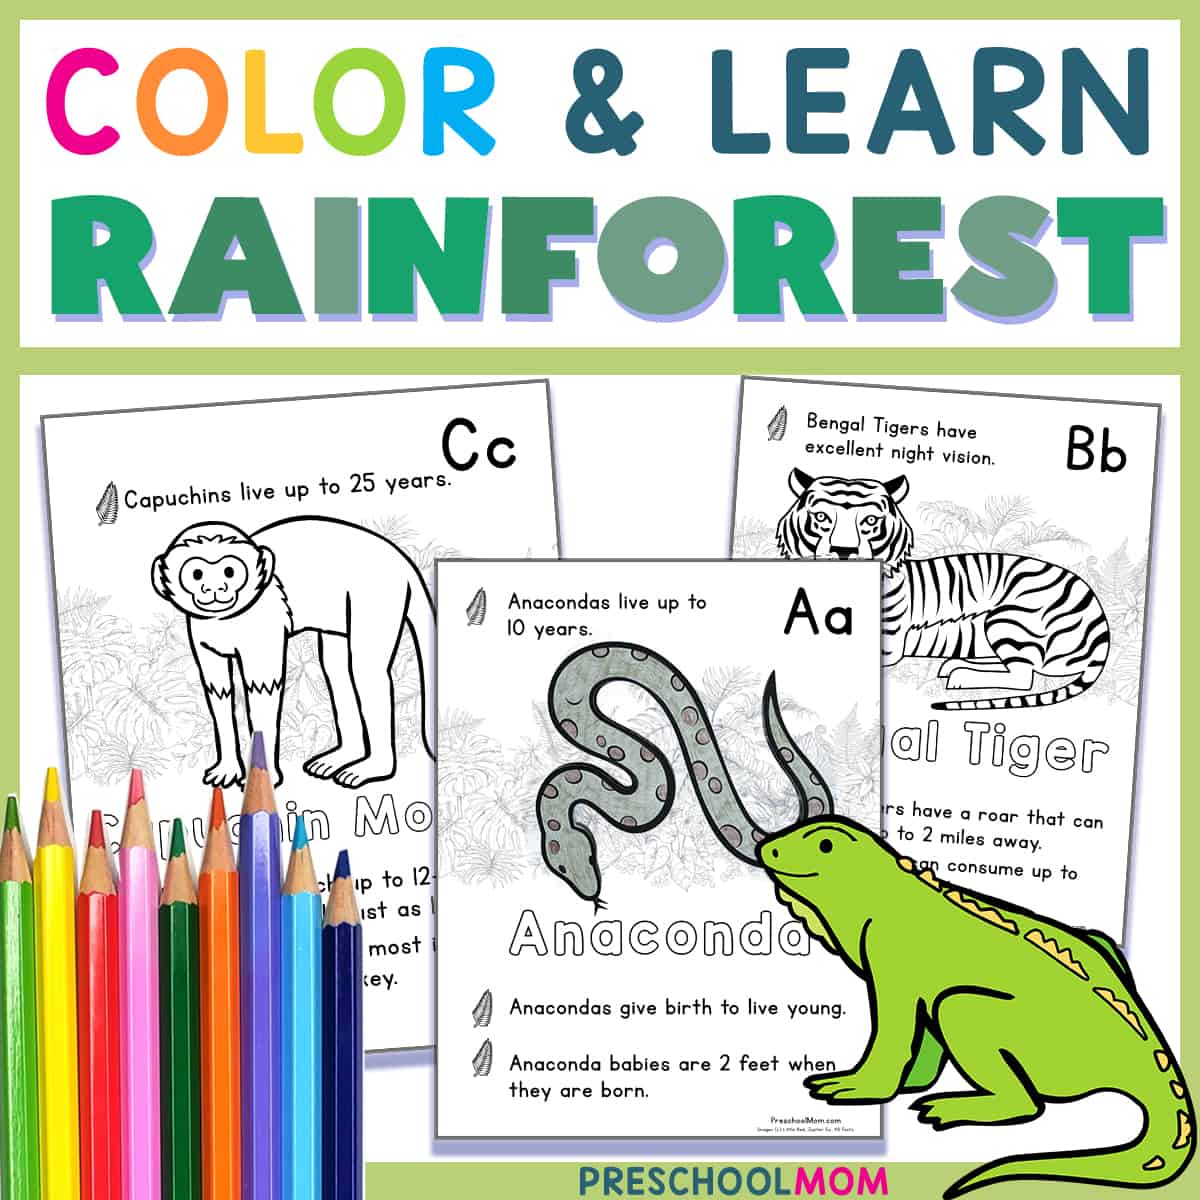 Rainforest coloring pages